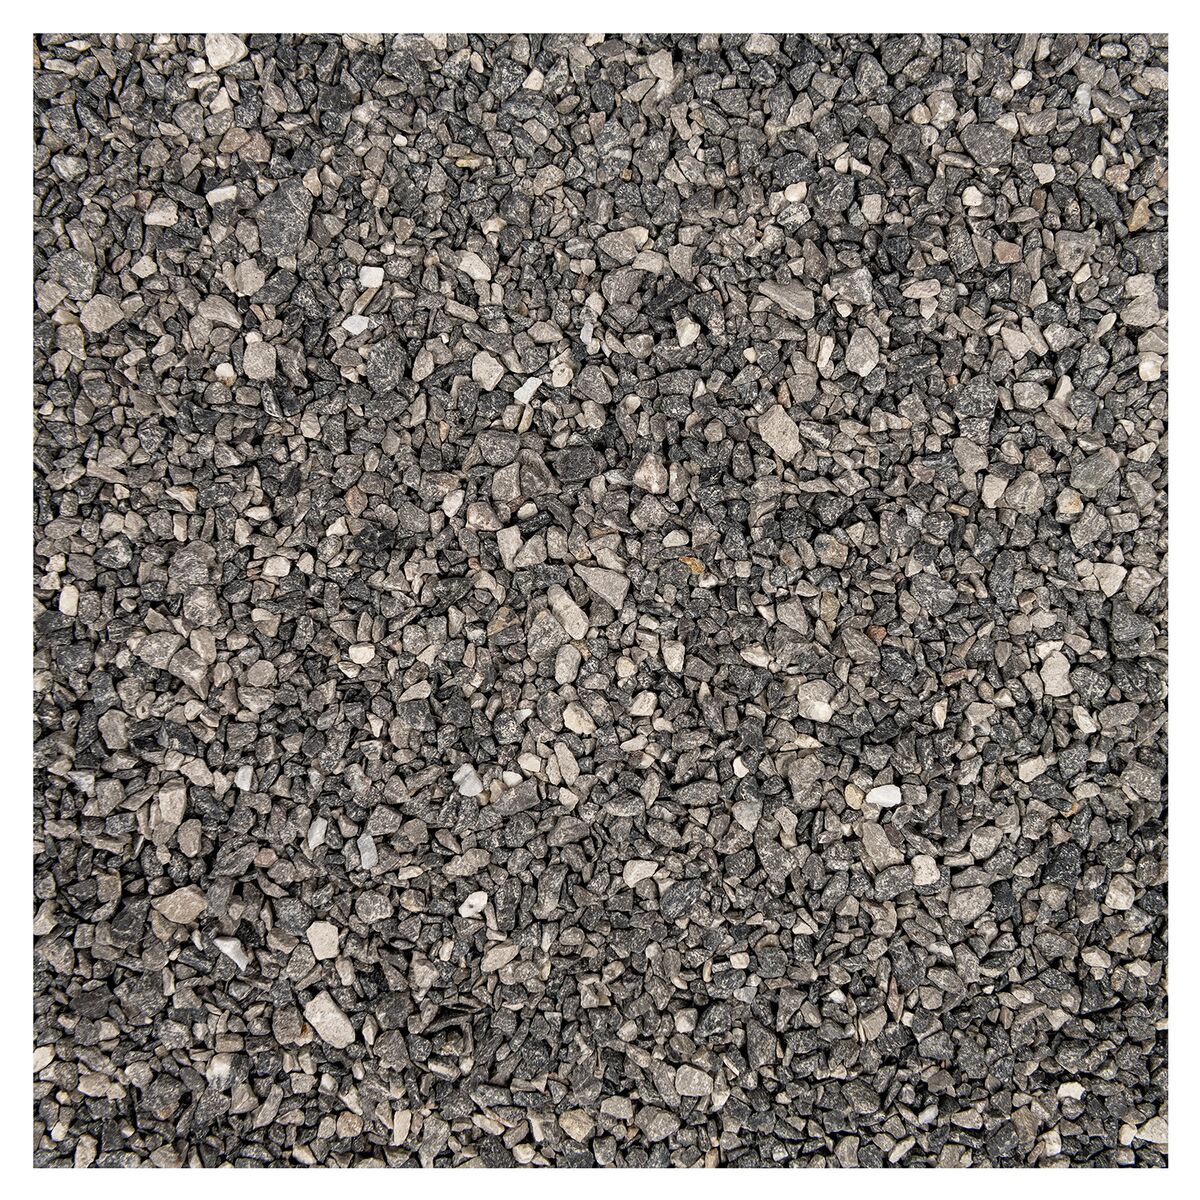 Voegsplit Granit Grey 2-4 mm 25 kg